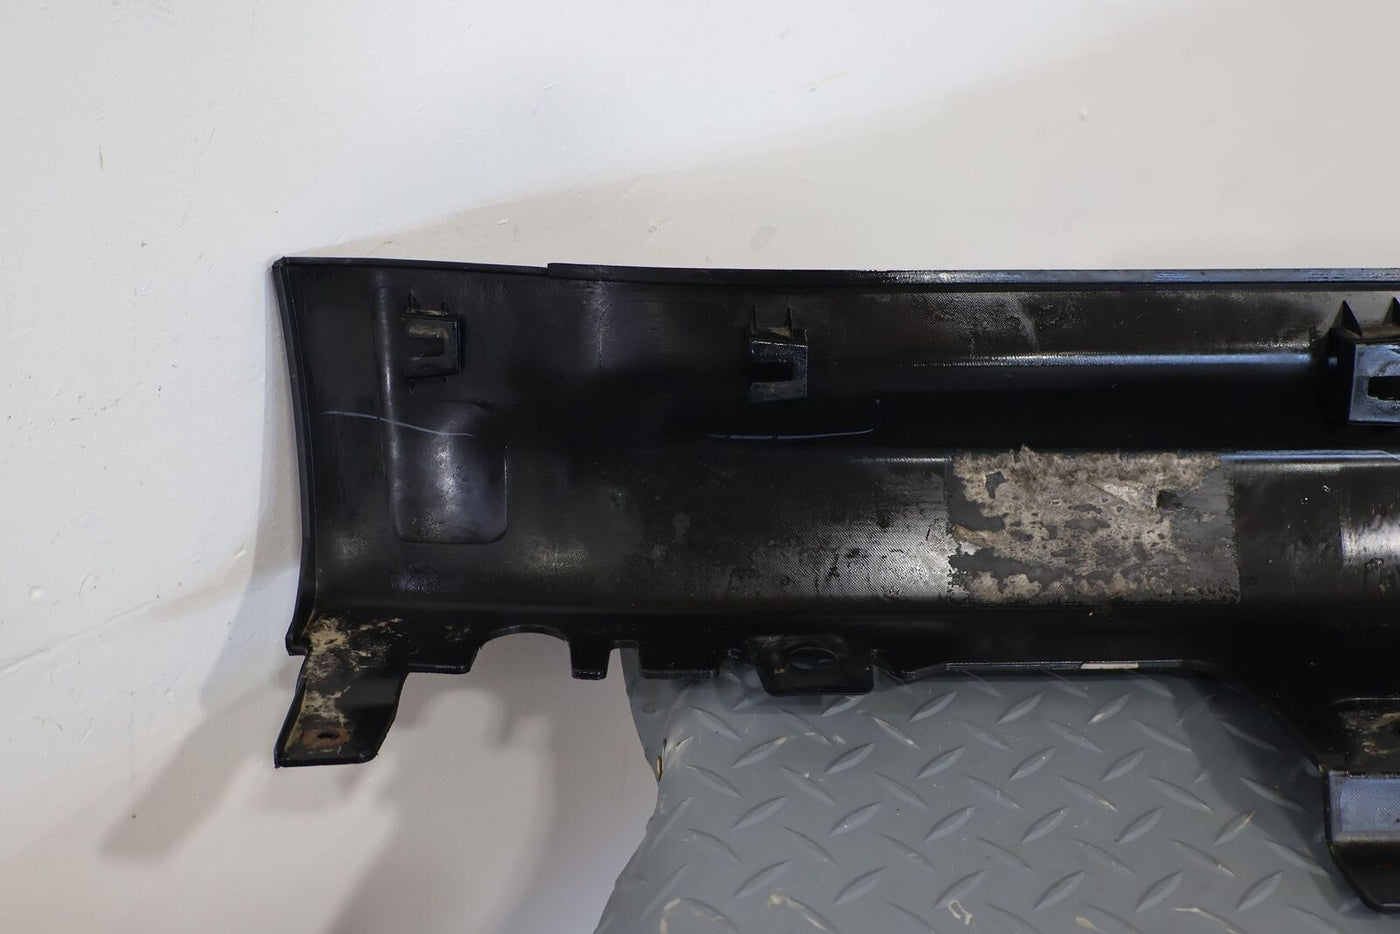 07-15 Mini Cooper S Coupe Left LH Rocker Moulding (Black) W/ JCW Plate Insert